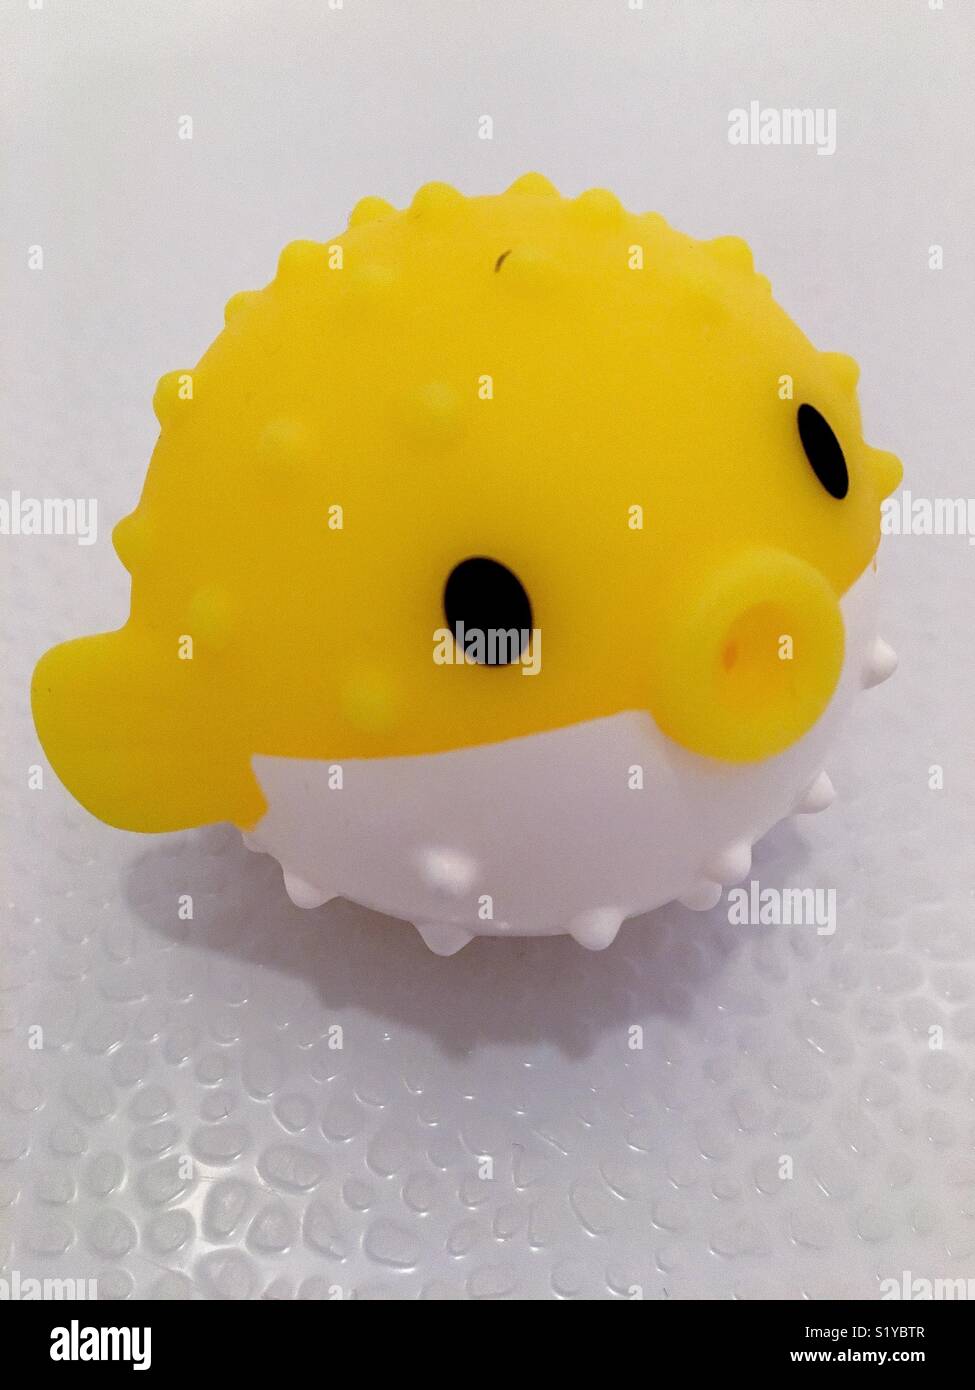 Yellow rubber puffer fish in bath tub Stock Photo - Alamy